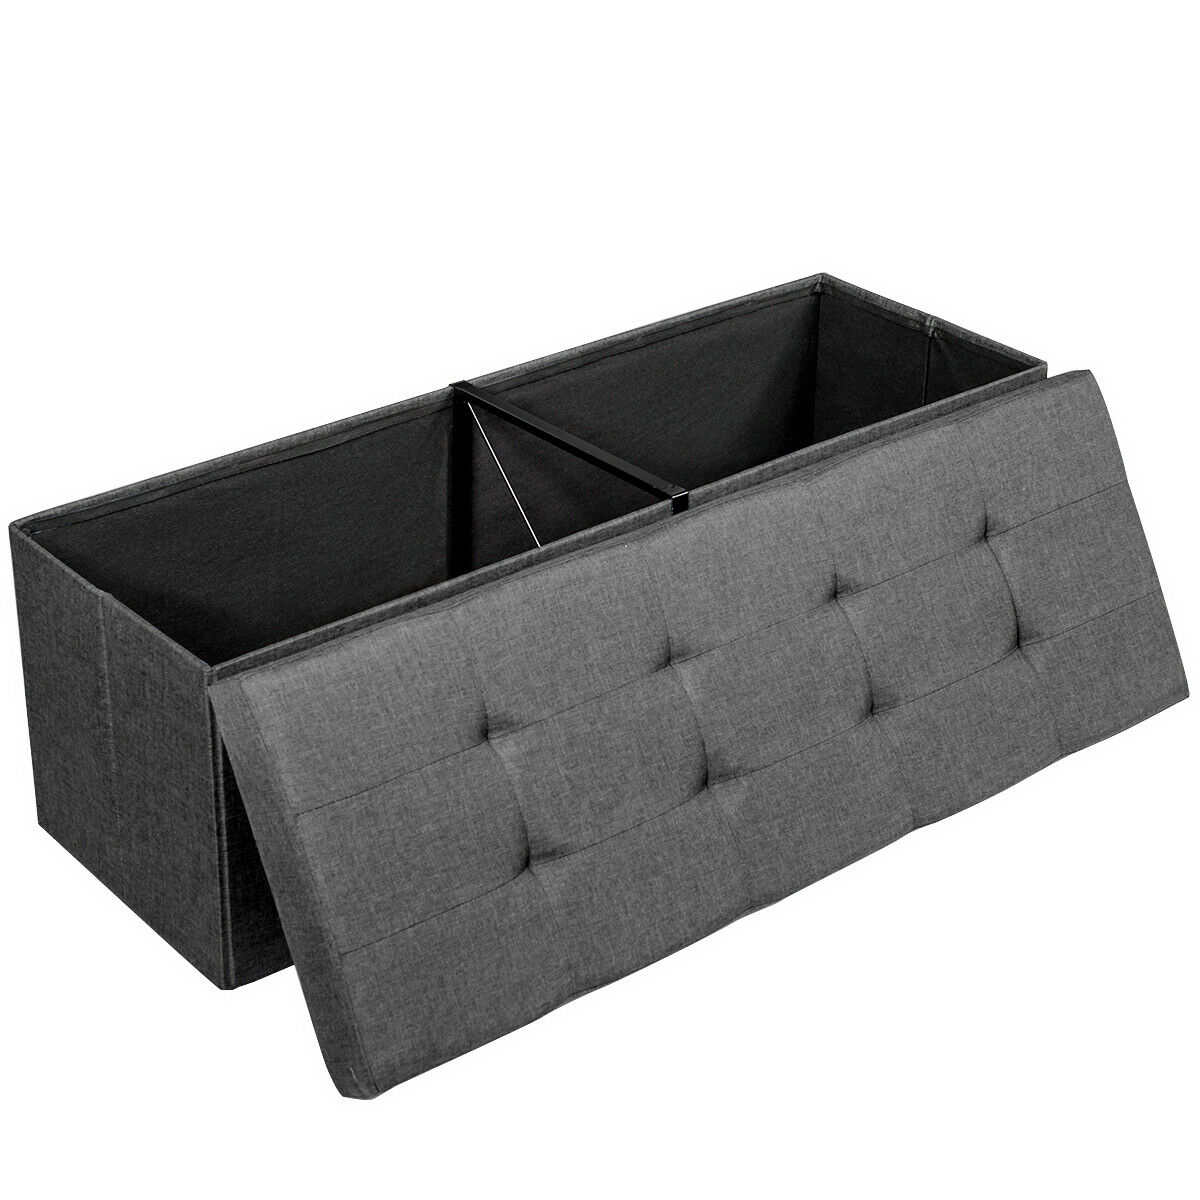 Folding Storage Ottoman Bench with Lid for Hallway-Grey